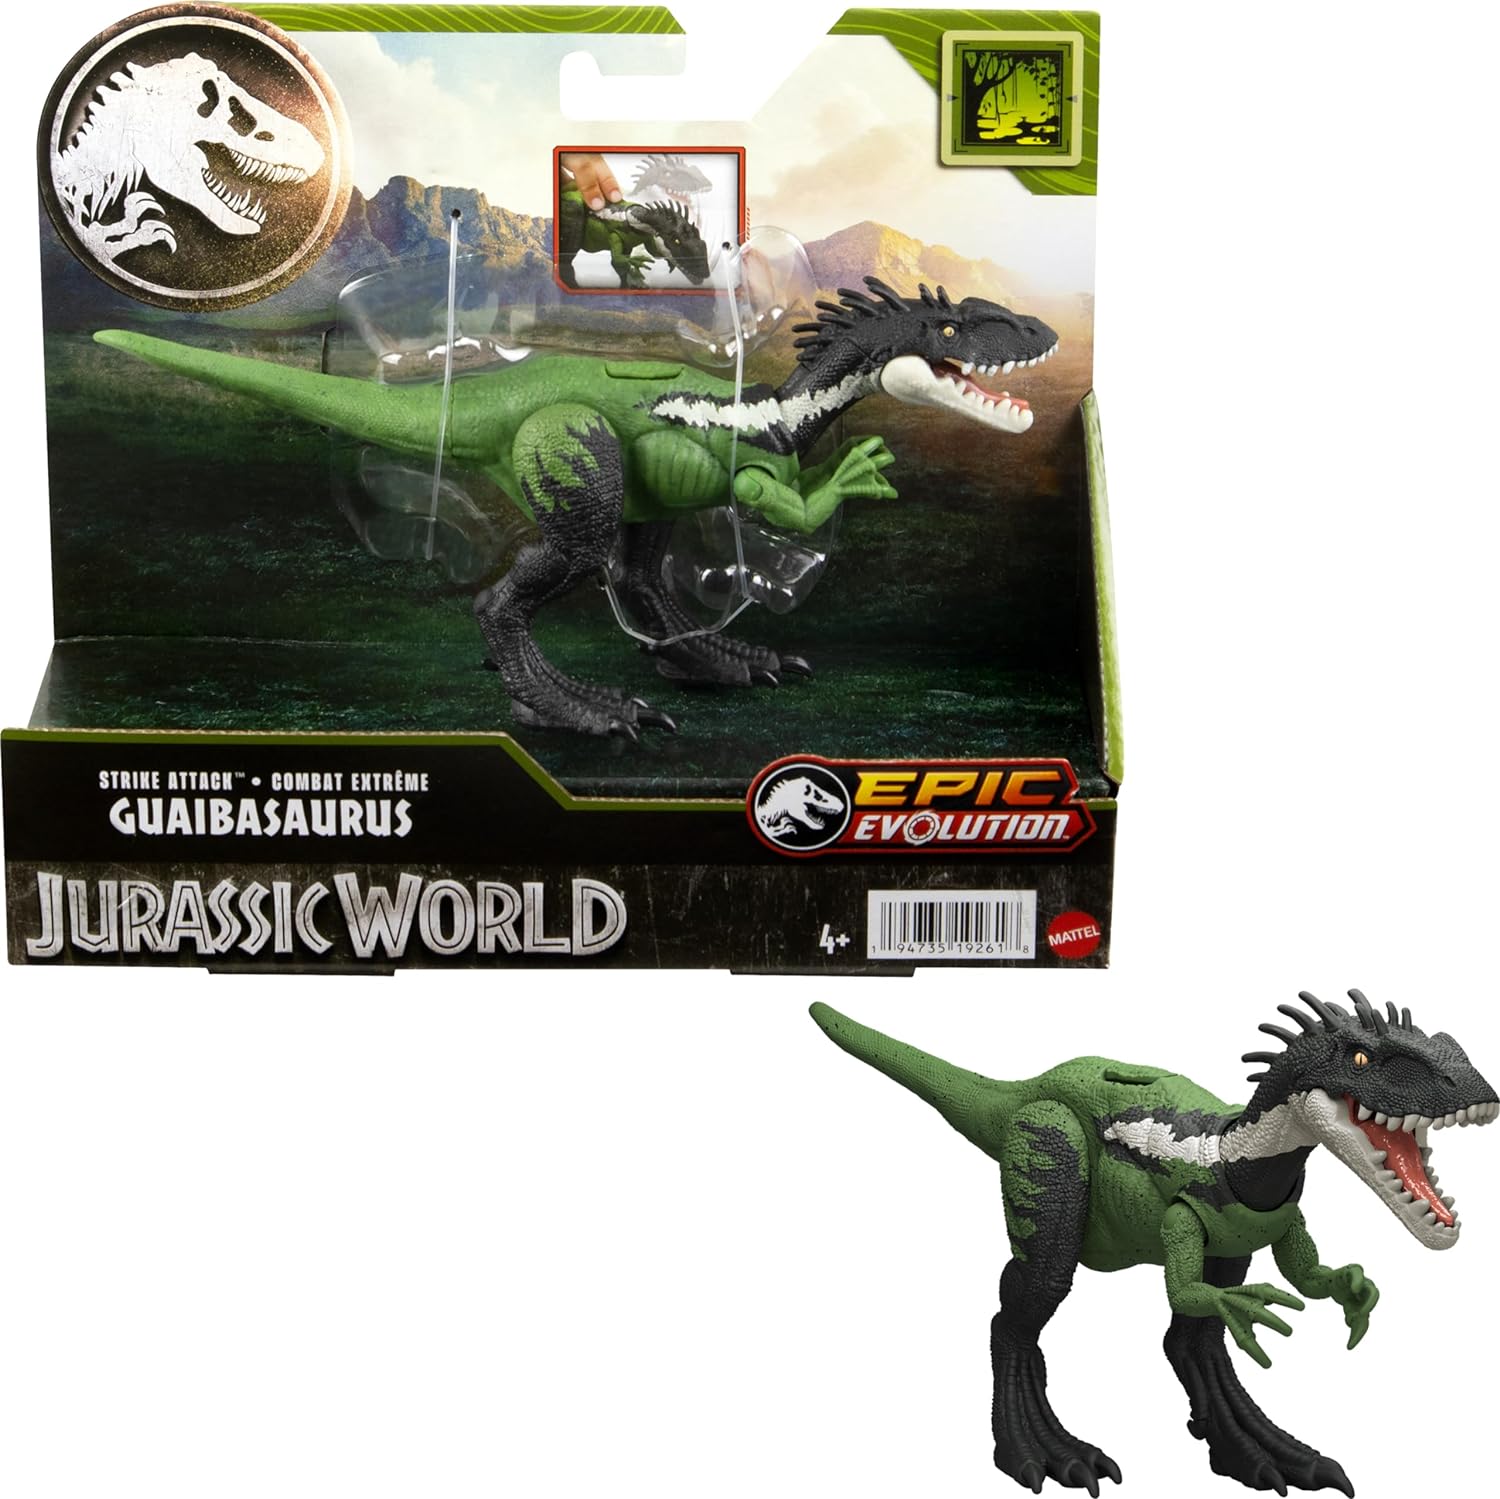 Jurassic World Strike Attack: Guaibasaurus Action Figure